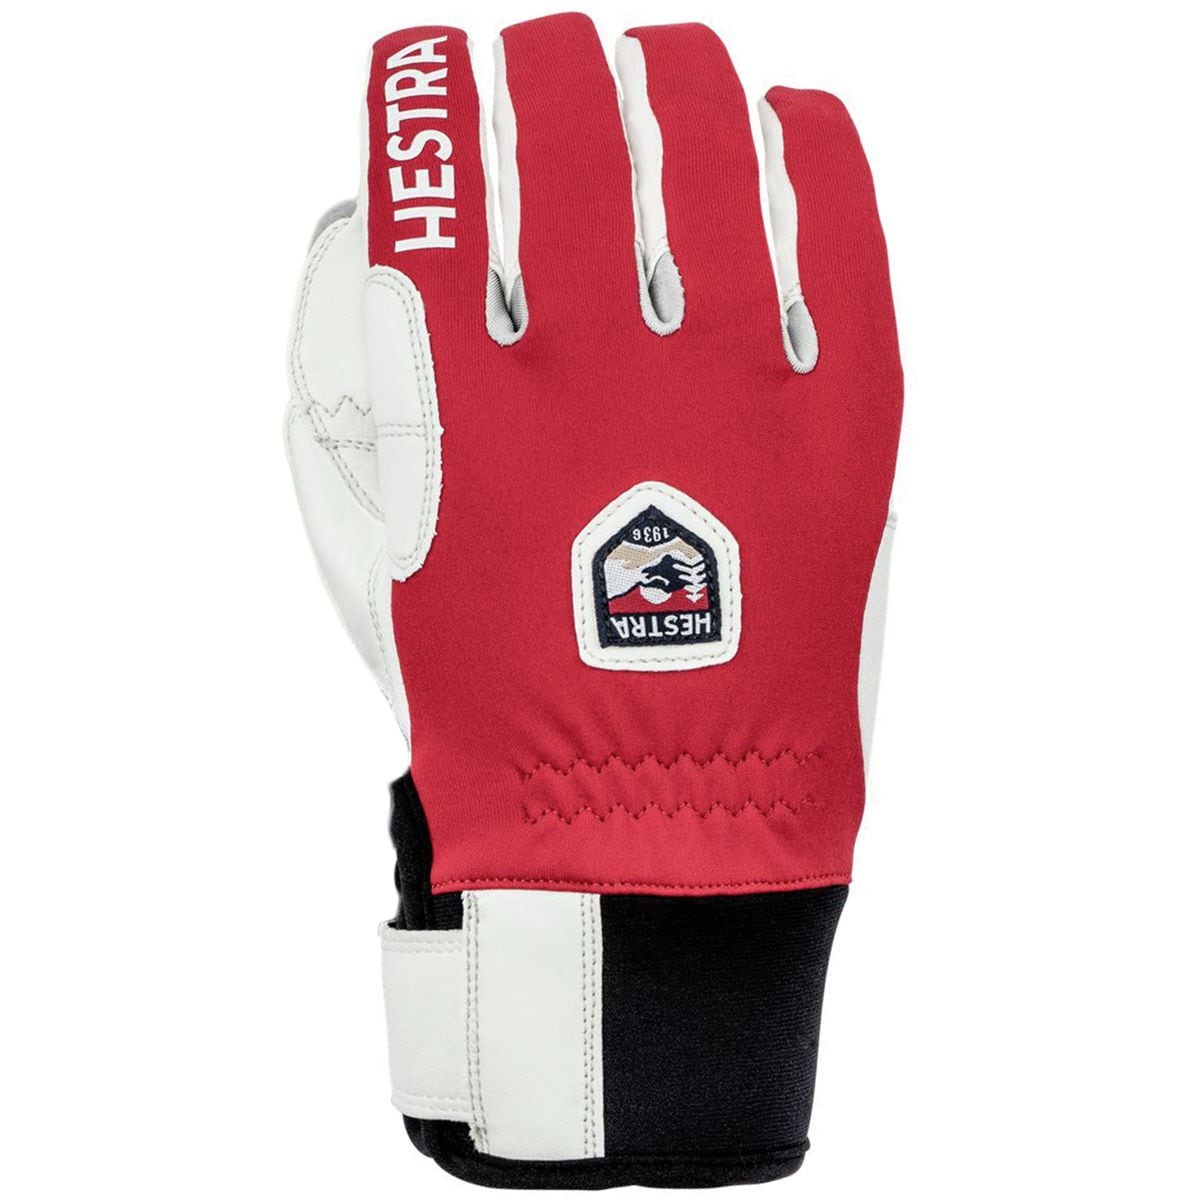 Hestra Ergo Grip Windstopper Race Glove - Men's Red